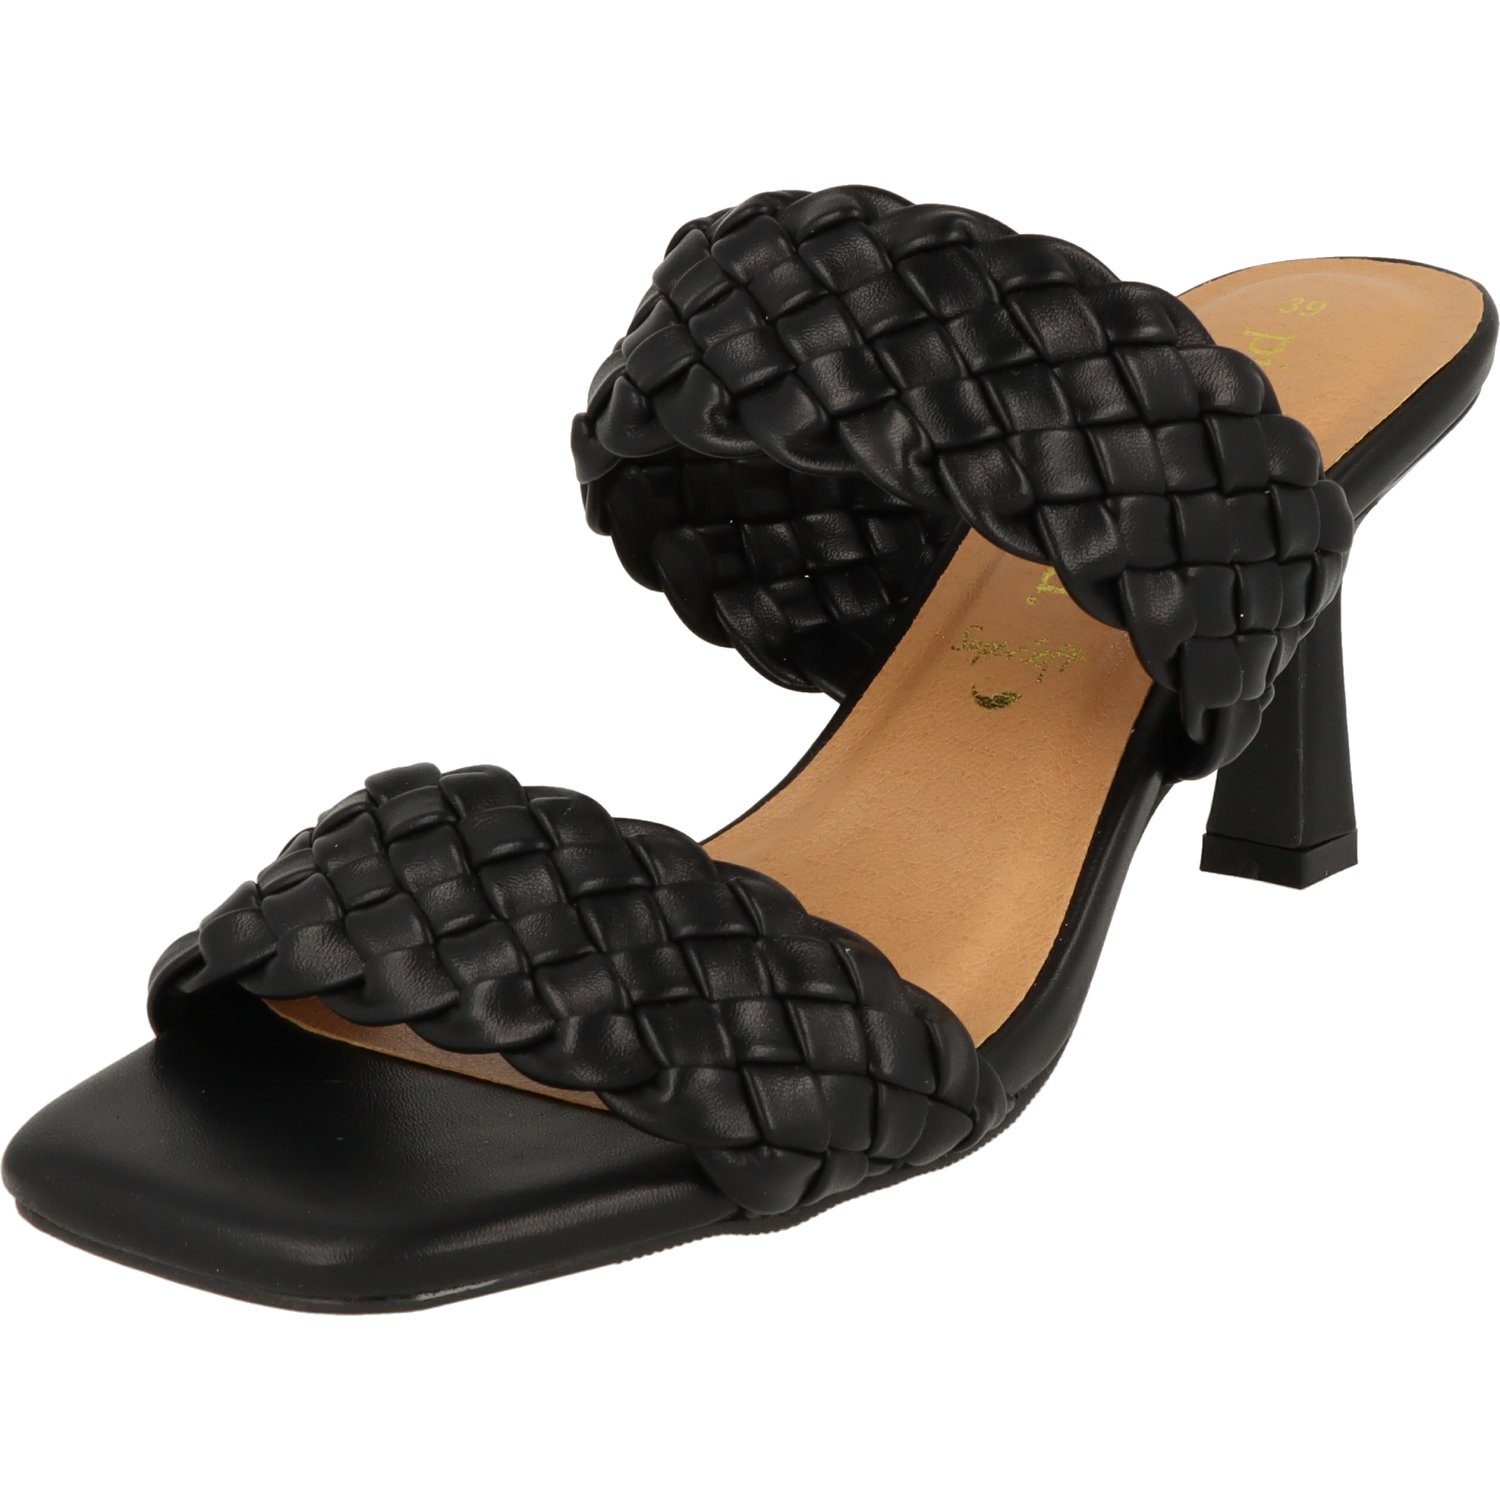 of Absatzsandale mind. Damen 273-161 Schuhe piece elegante Slipper Black High-Heel-Sandalette